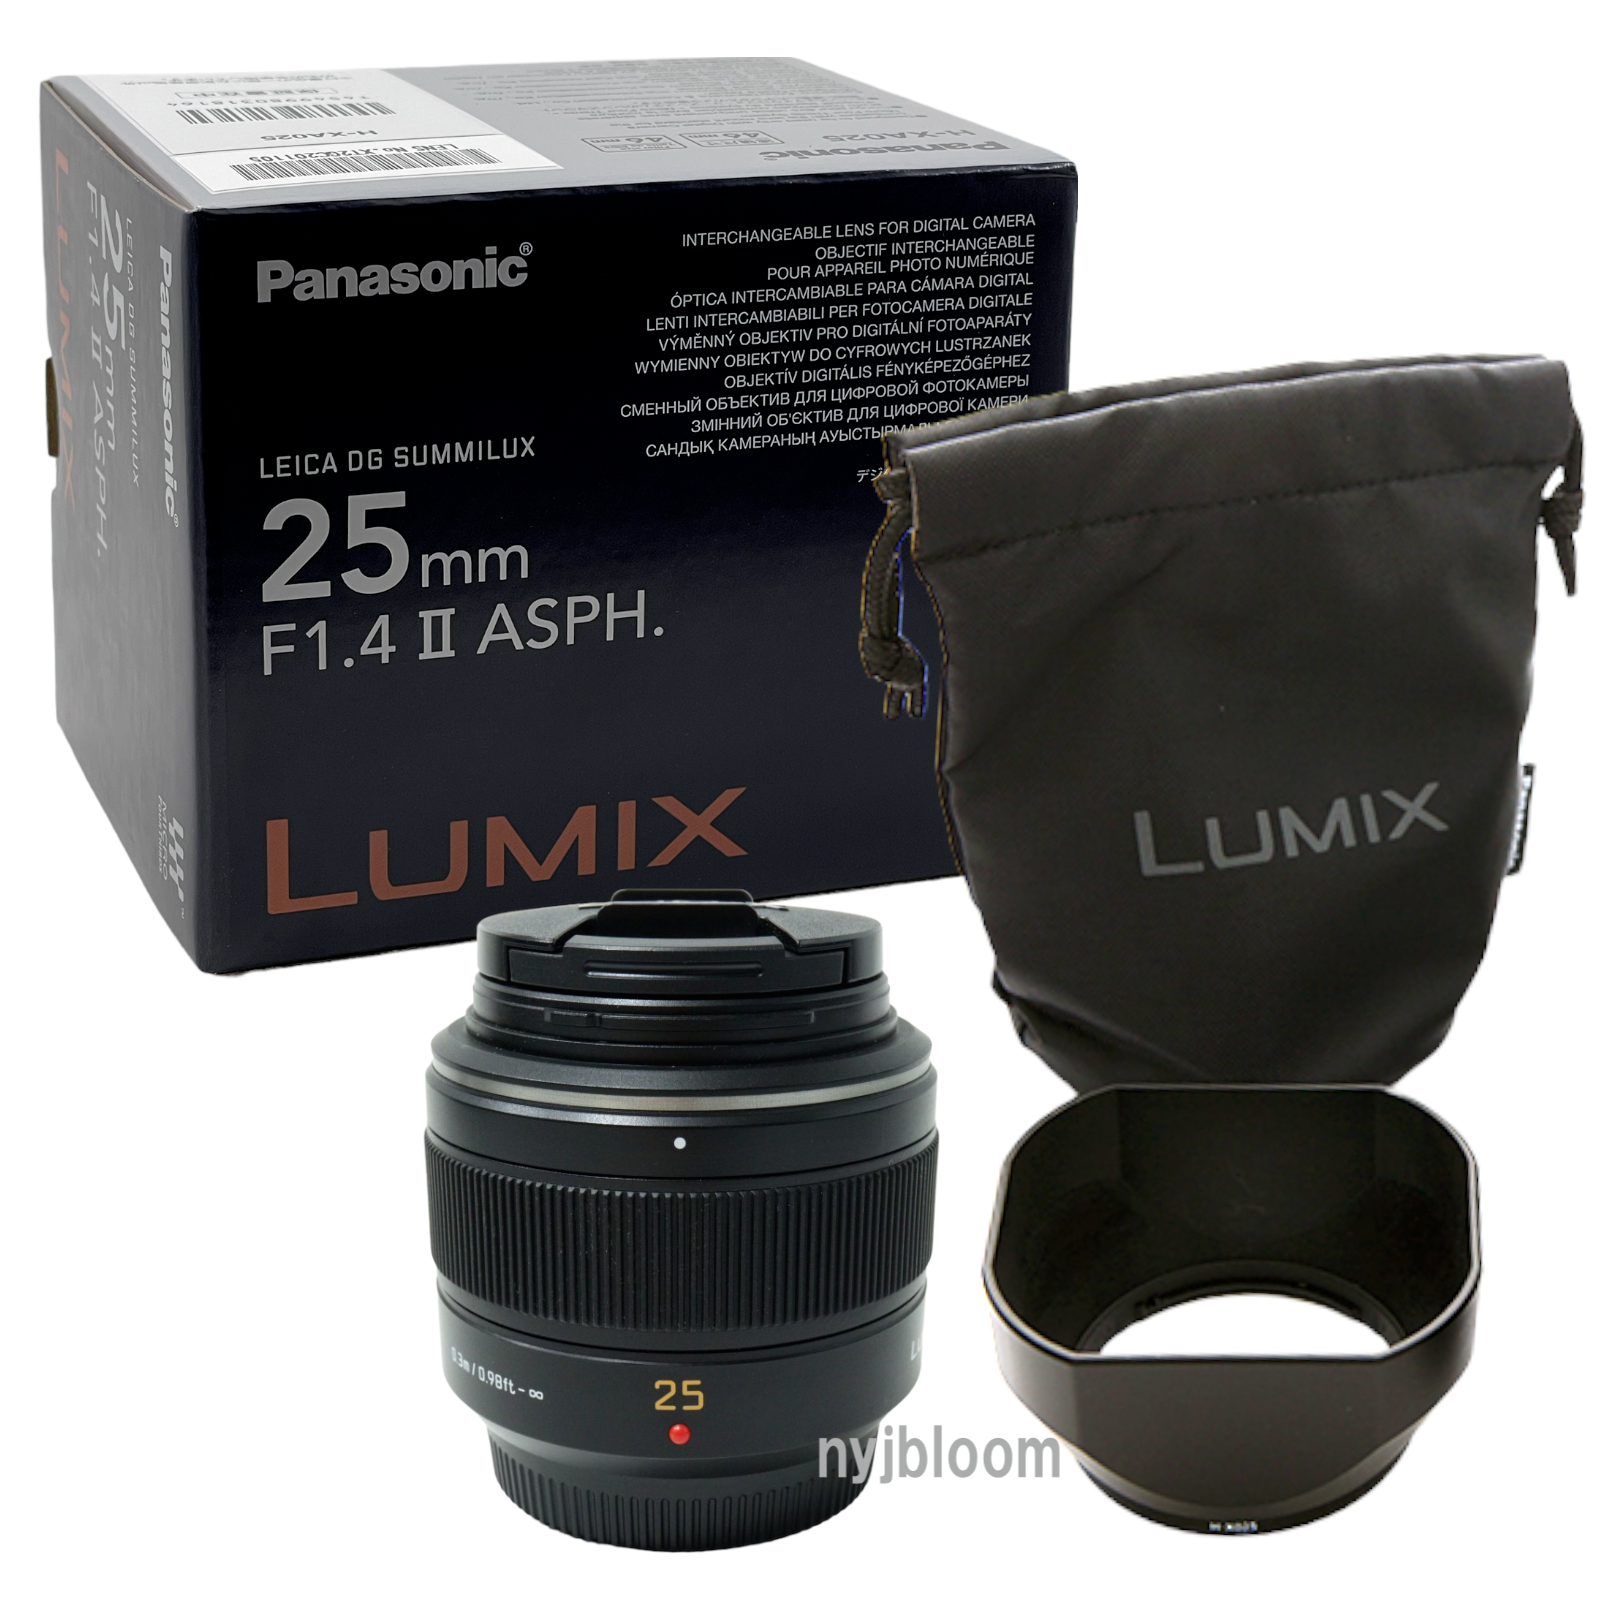 New Panasonic Leica DG Summilux 25mm f/1.4 II ASPH. Lens (H-XA025)